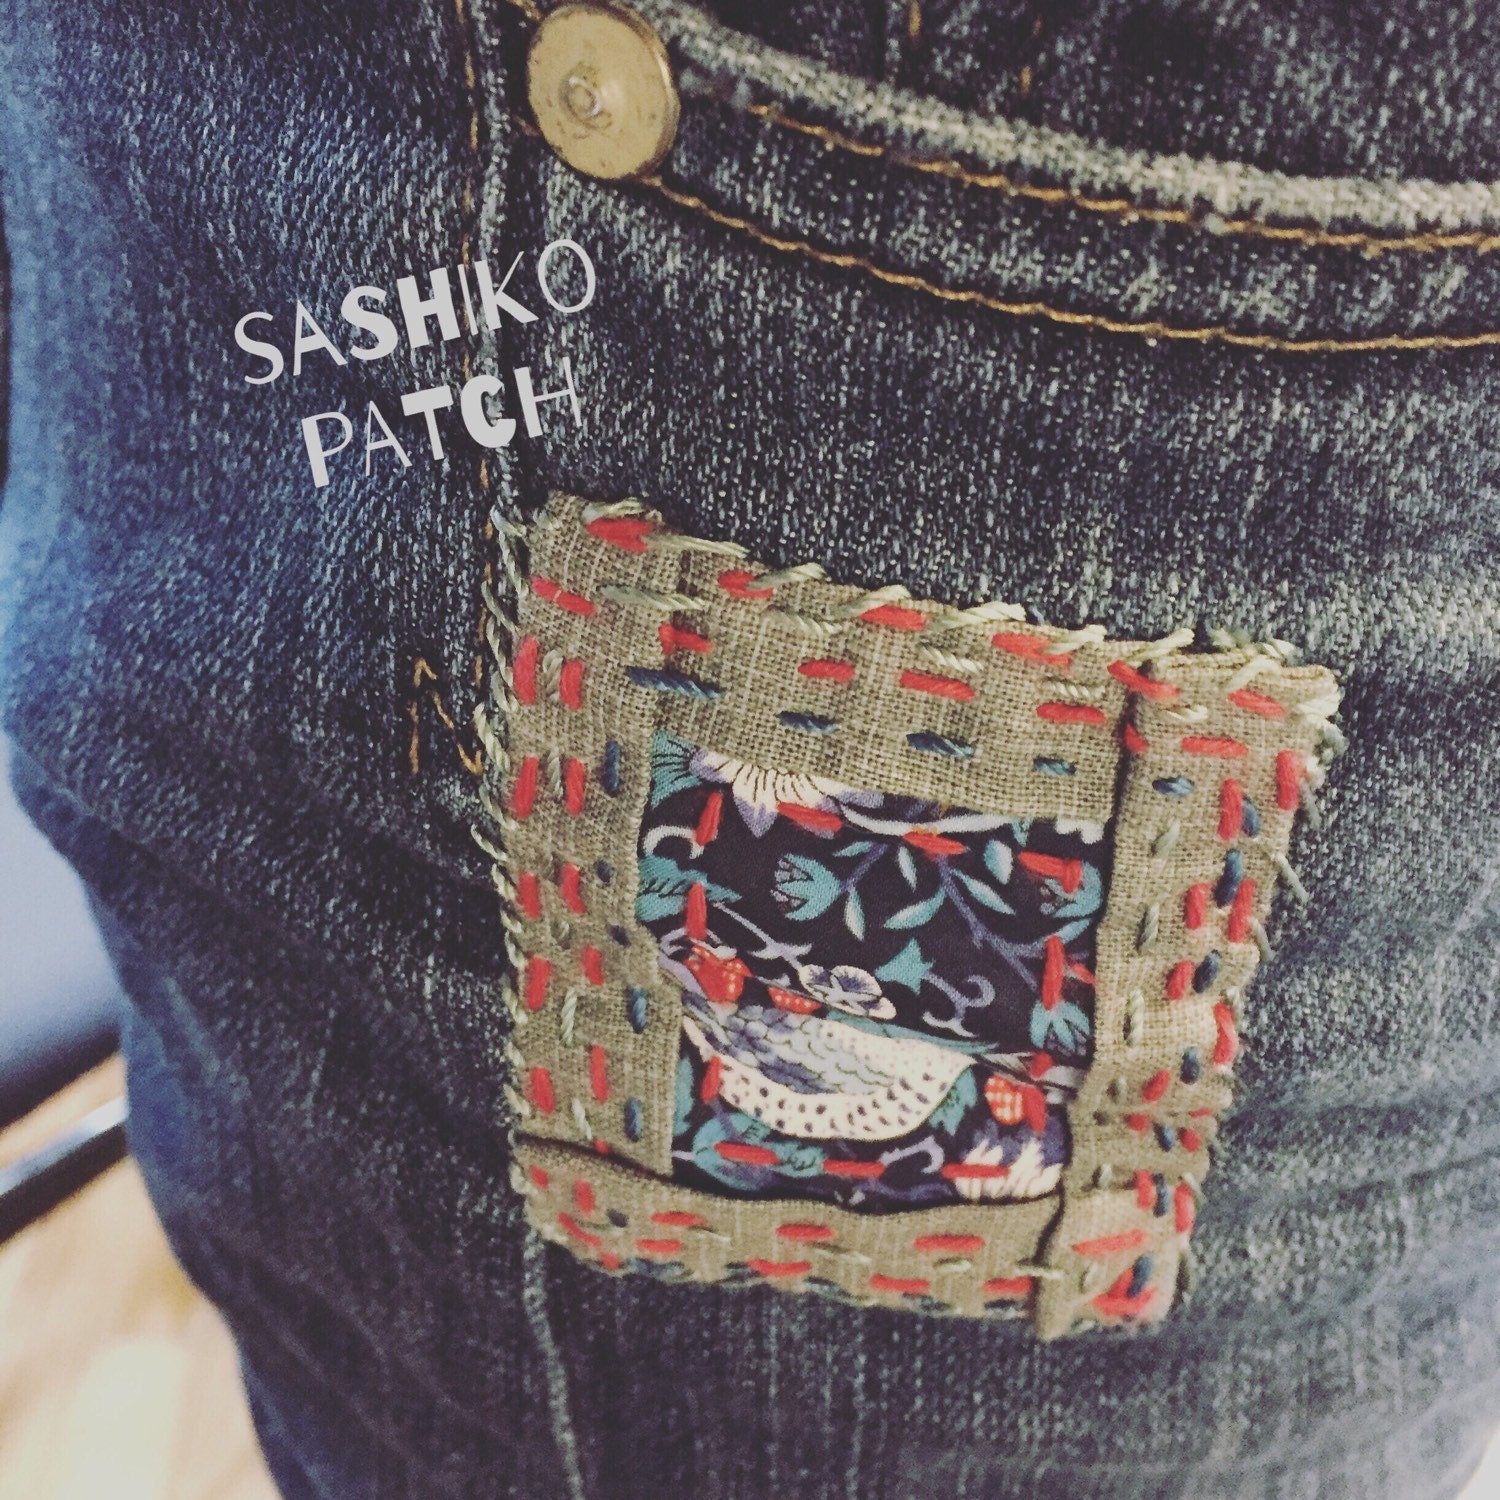 Handmade Sew on Patch, Boro Patch, Sashiko Patch, Japanese Patch